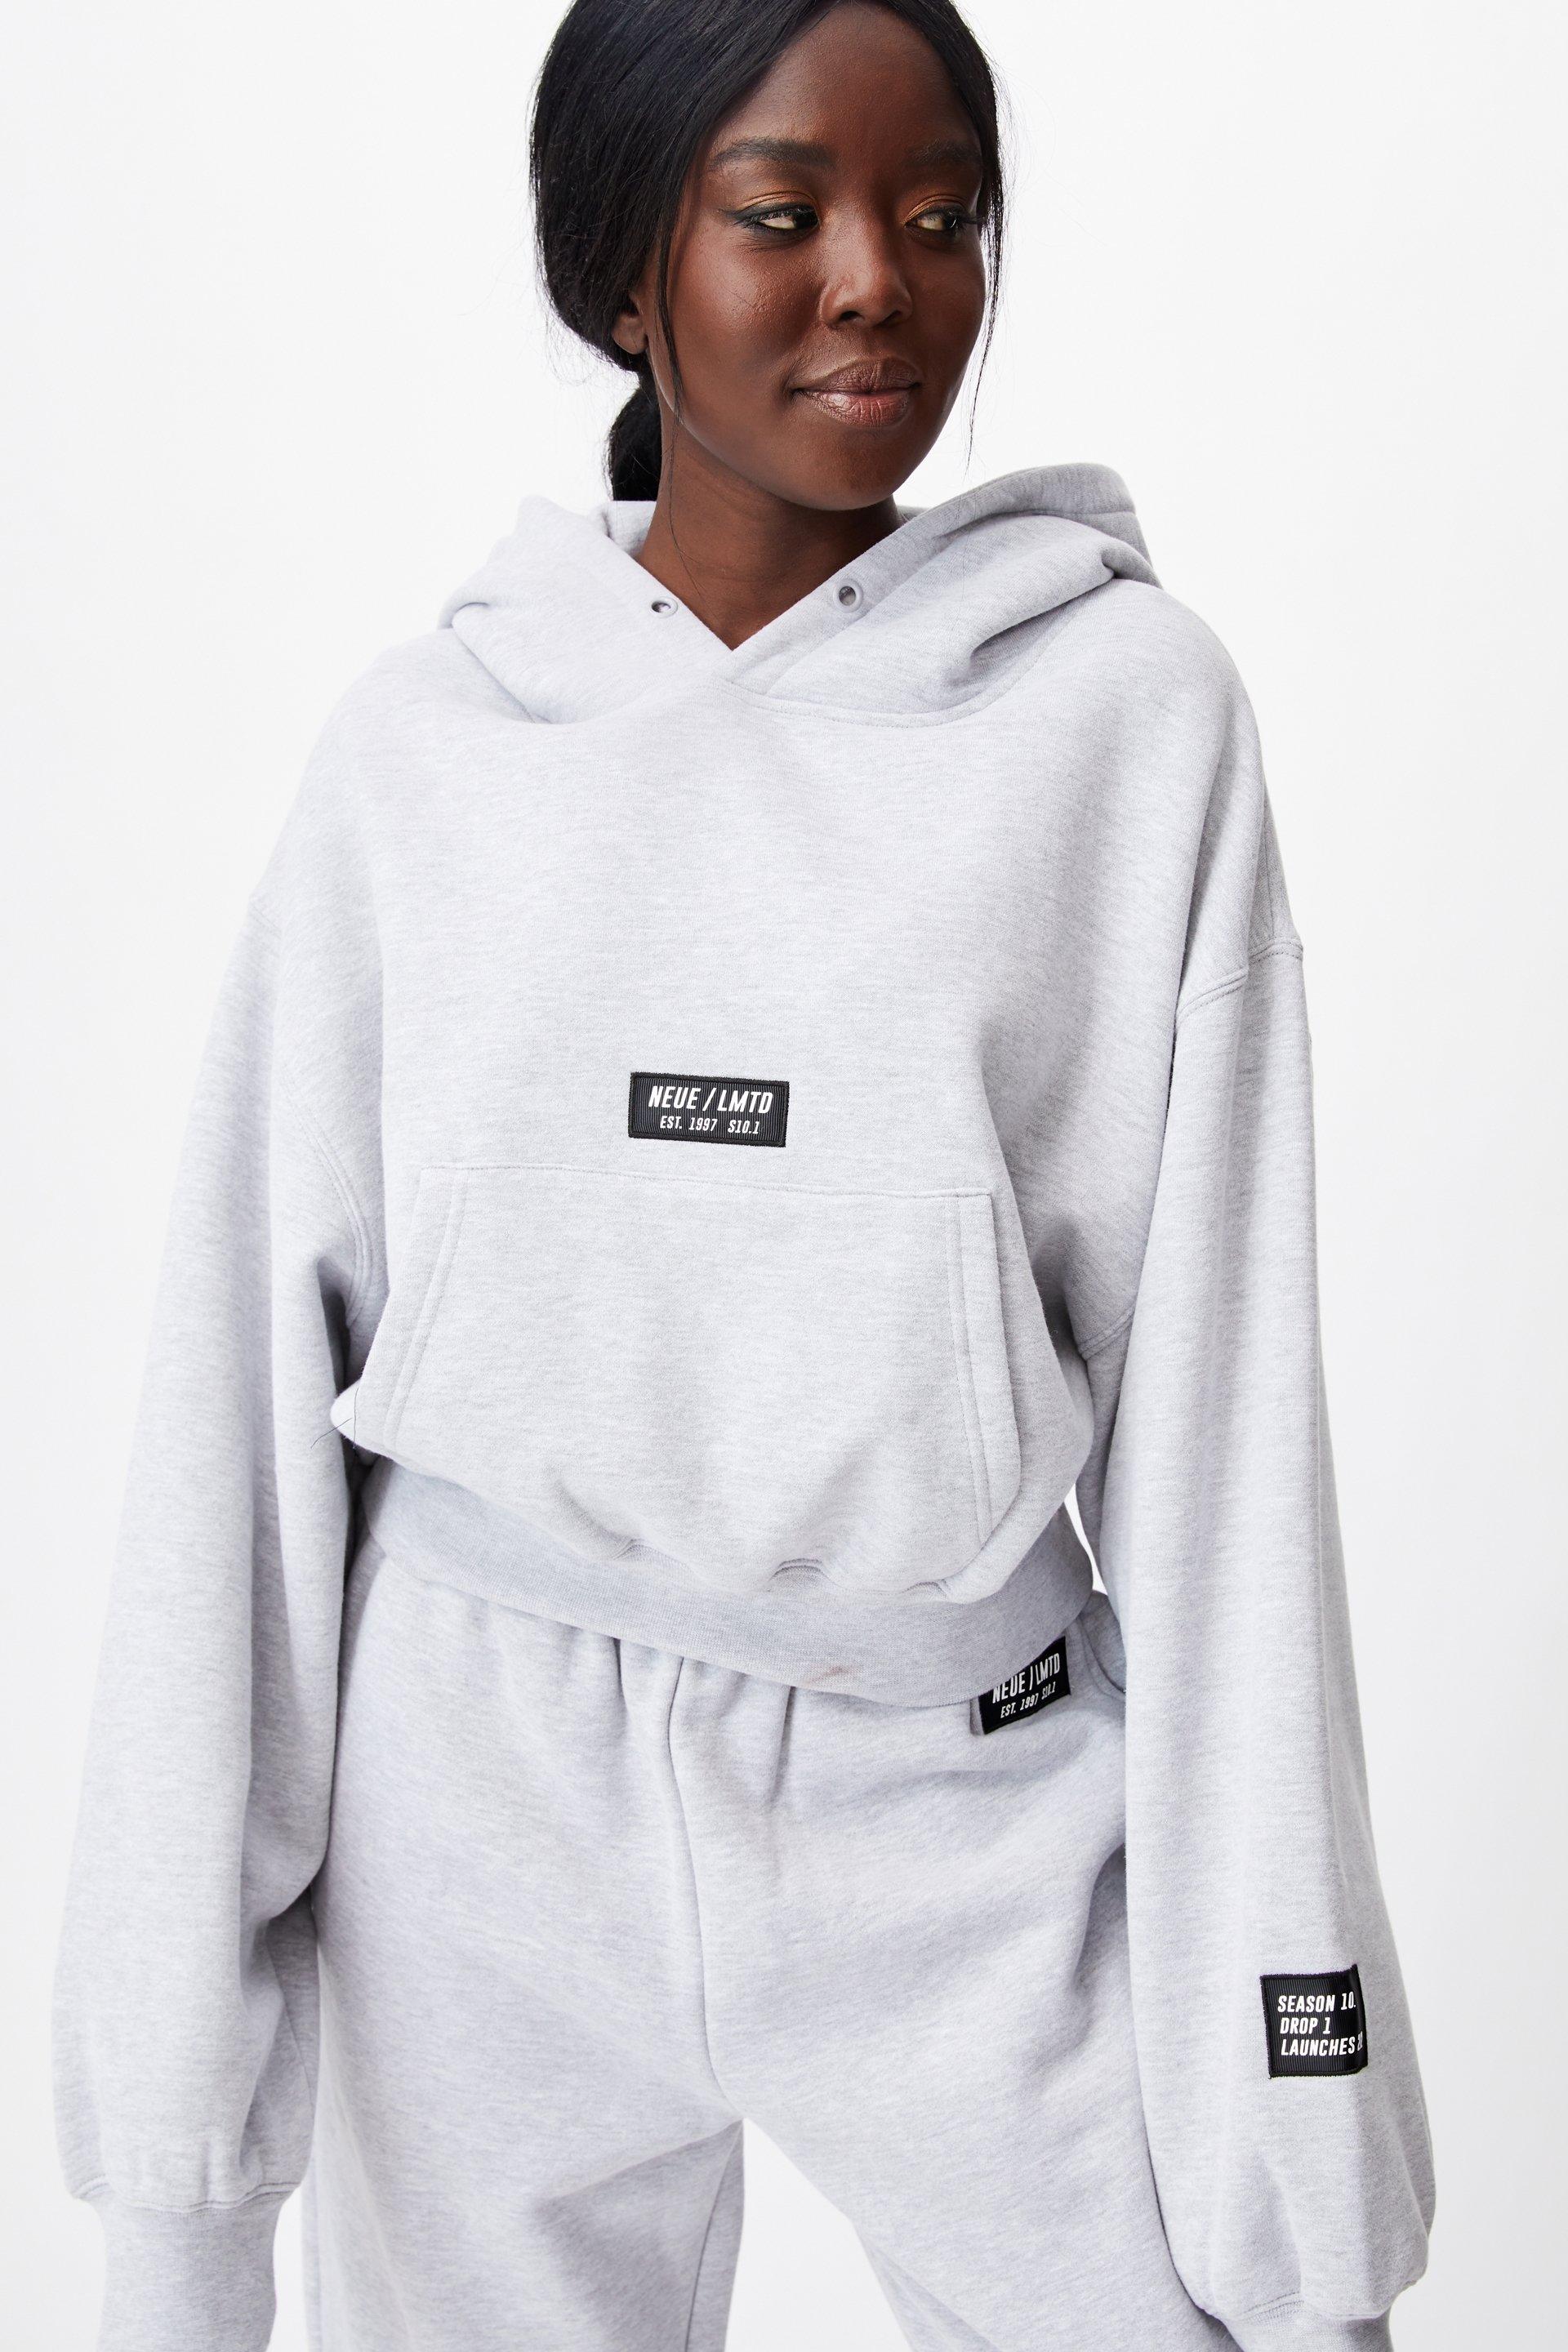 Athluxe slouchy cropped hoodie - grey marle/neue lmtd Factorie Hoodies ...